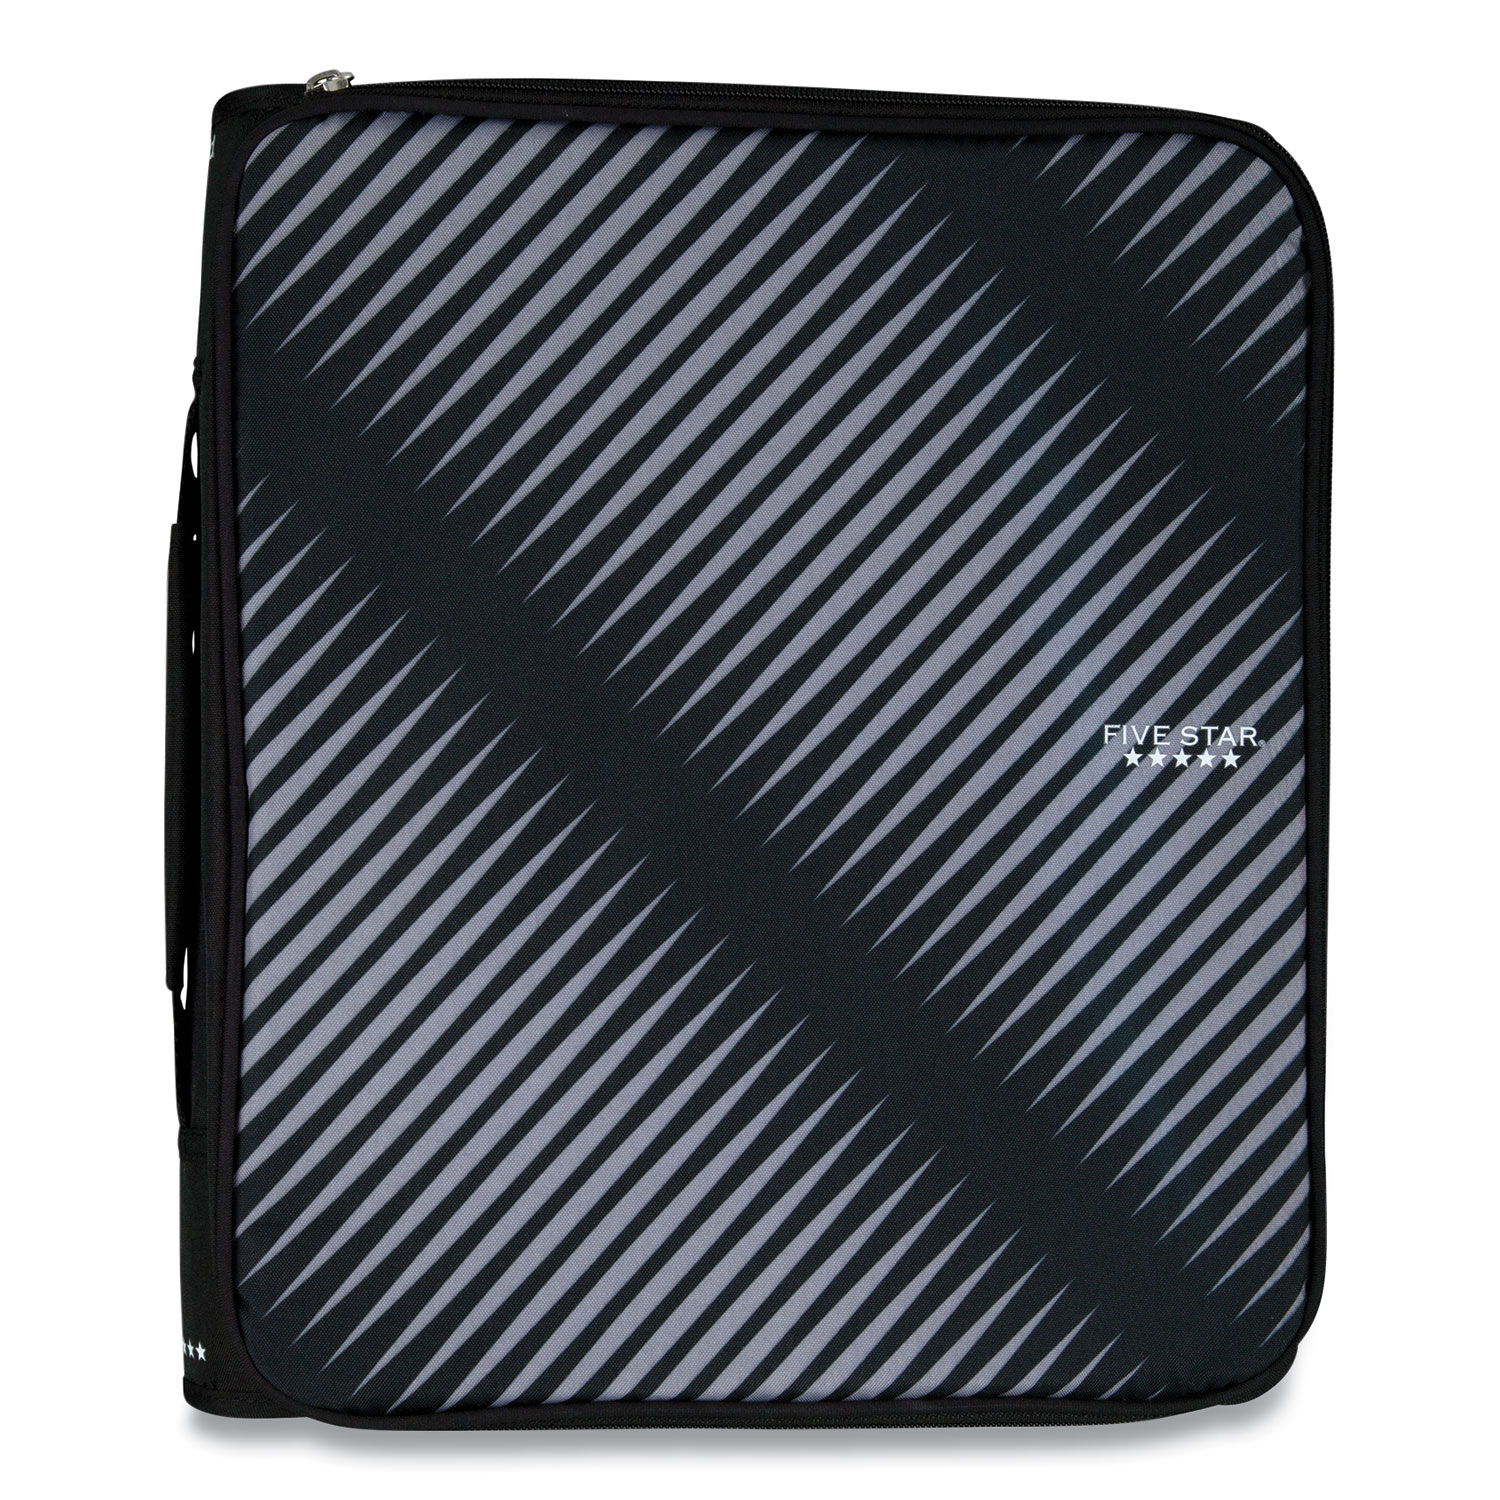 Five Star® Zipper Binder, 3 Rings, 2 Capacity, 11 x 8.5, Black/Gray Zebra Print Design